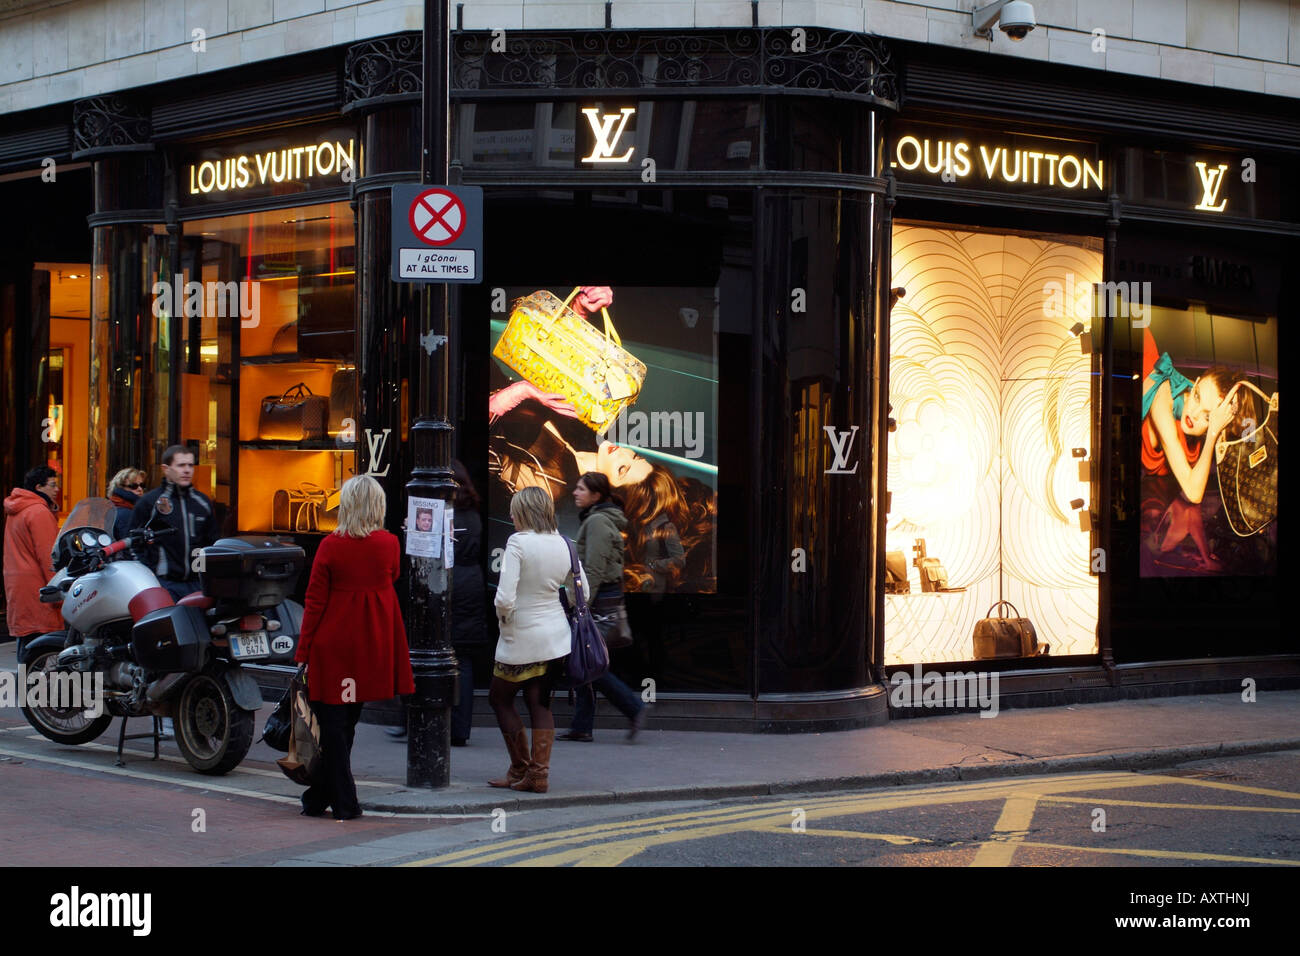 Louis Vuitton upmarket Shop Dublin City Centre Ireland Stock Photo Alamy